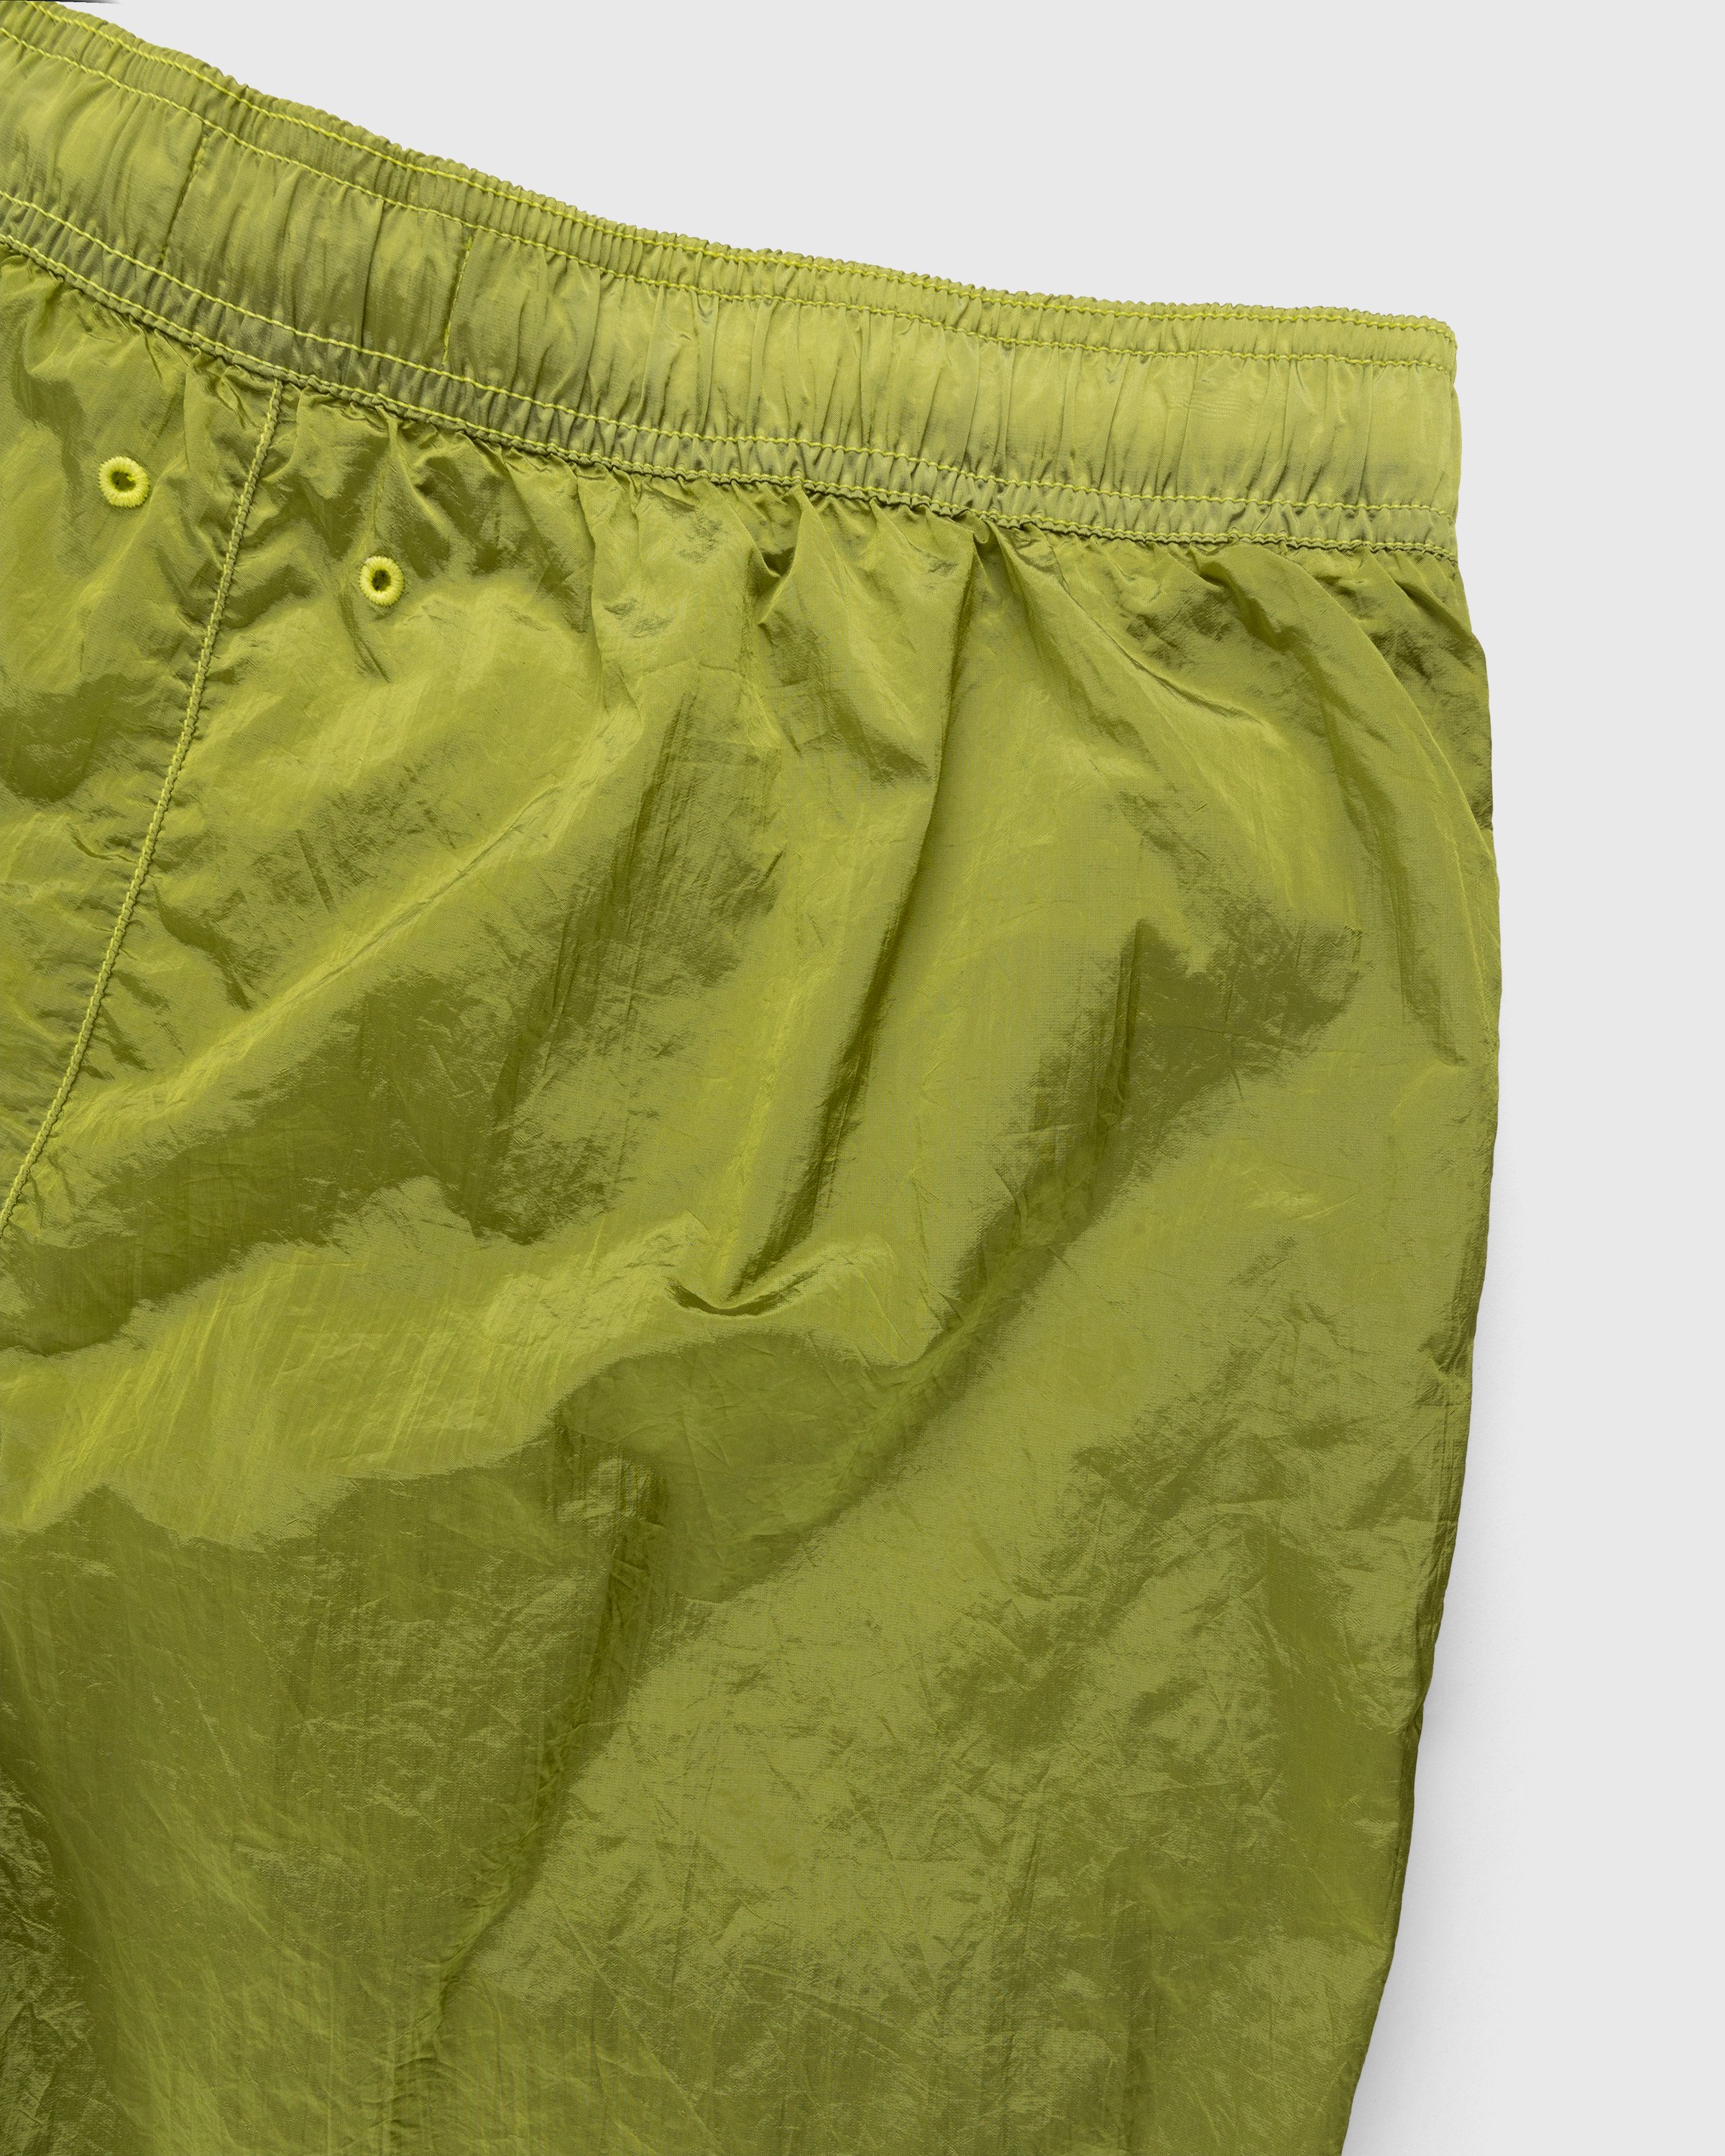 Stone Island - B0243 Nylon Metal Swim Shorts Lemon - Clothing - Yellow - Image 7